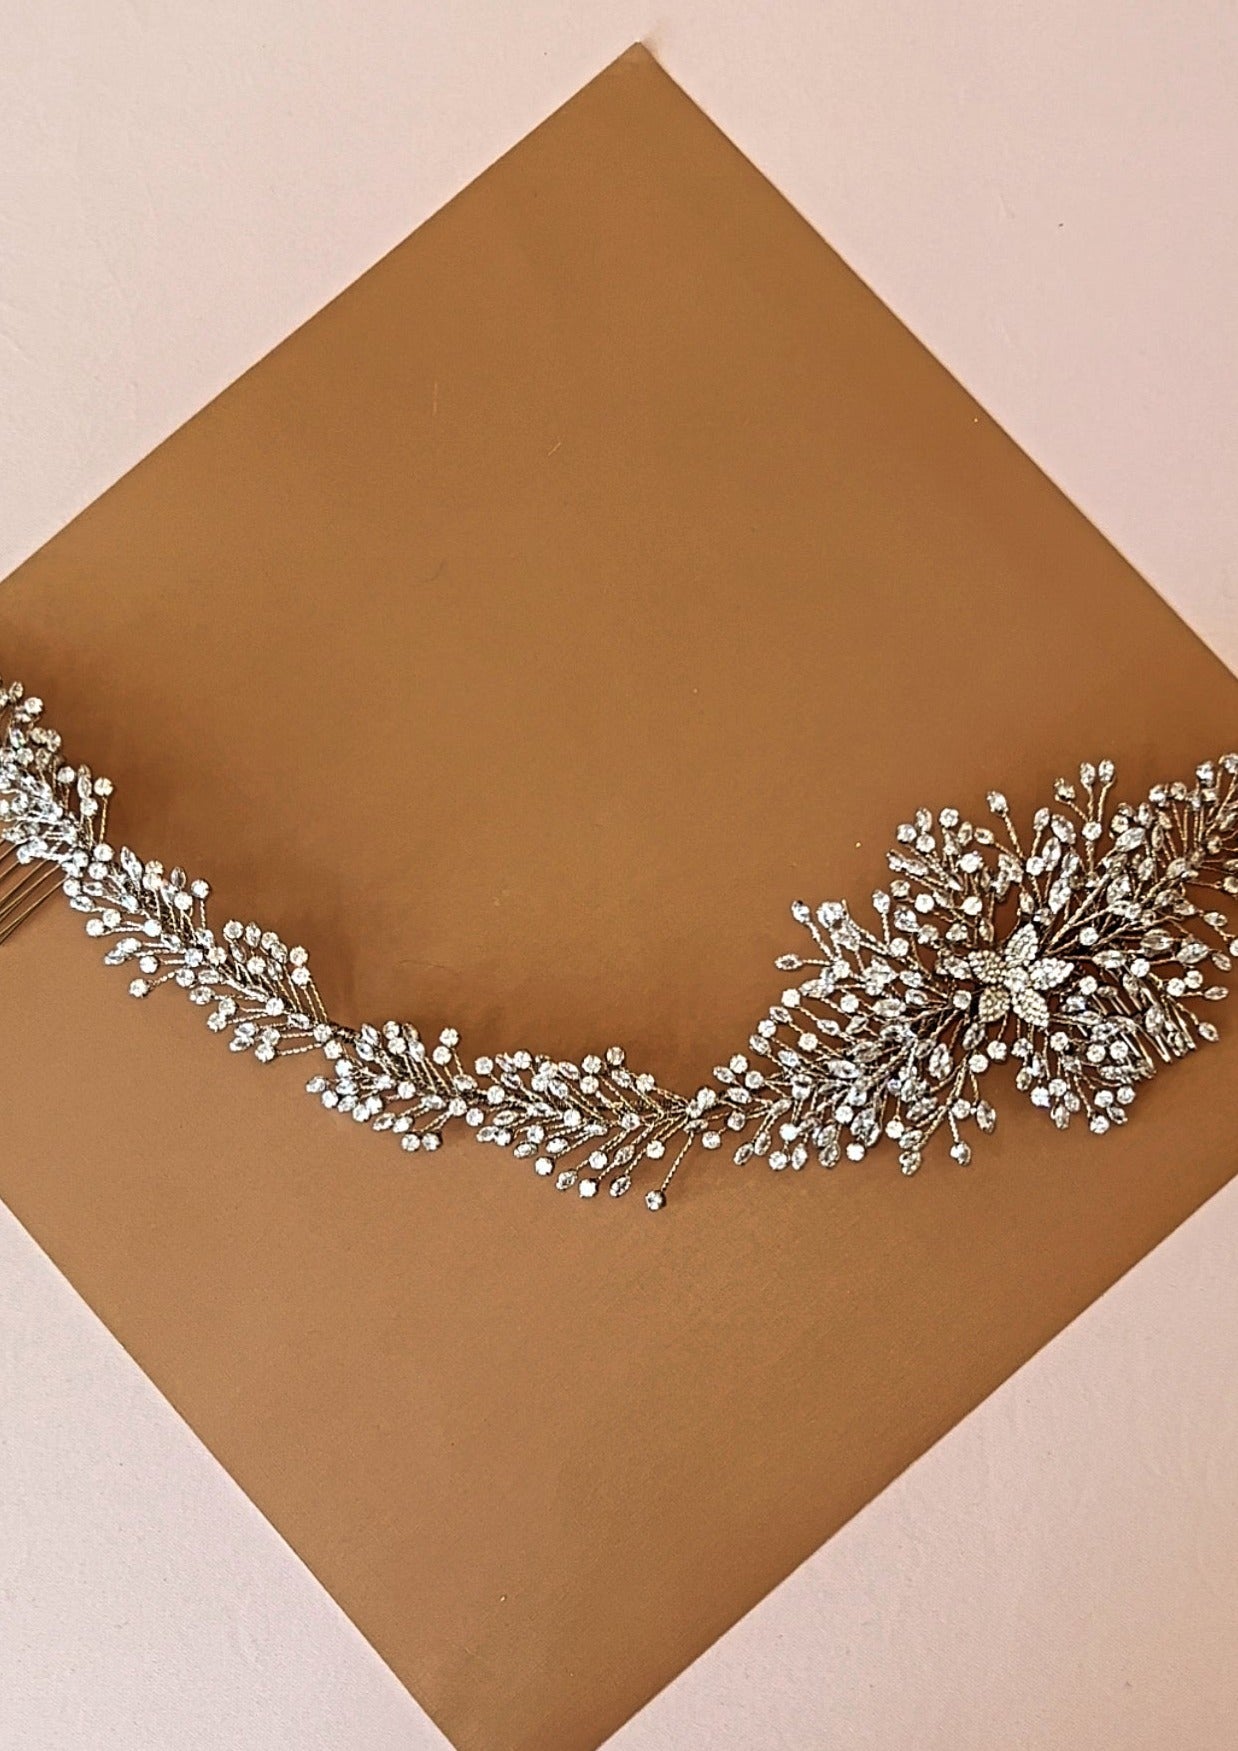 SOHEILA Luxurious Bridal Statement Headpiece - SAMPLE SALE